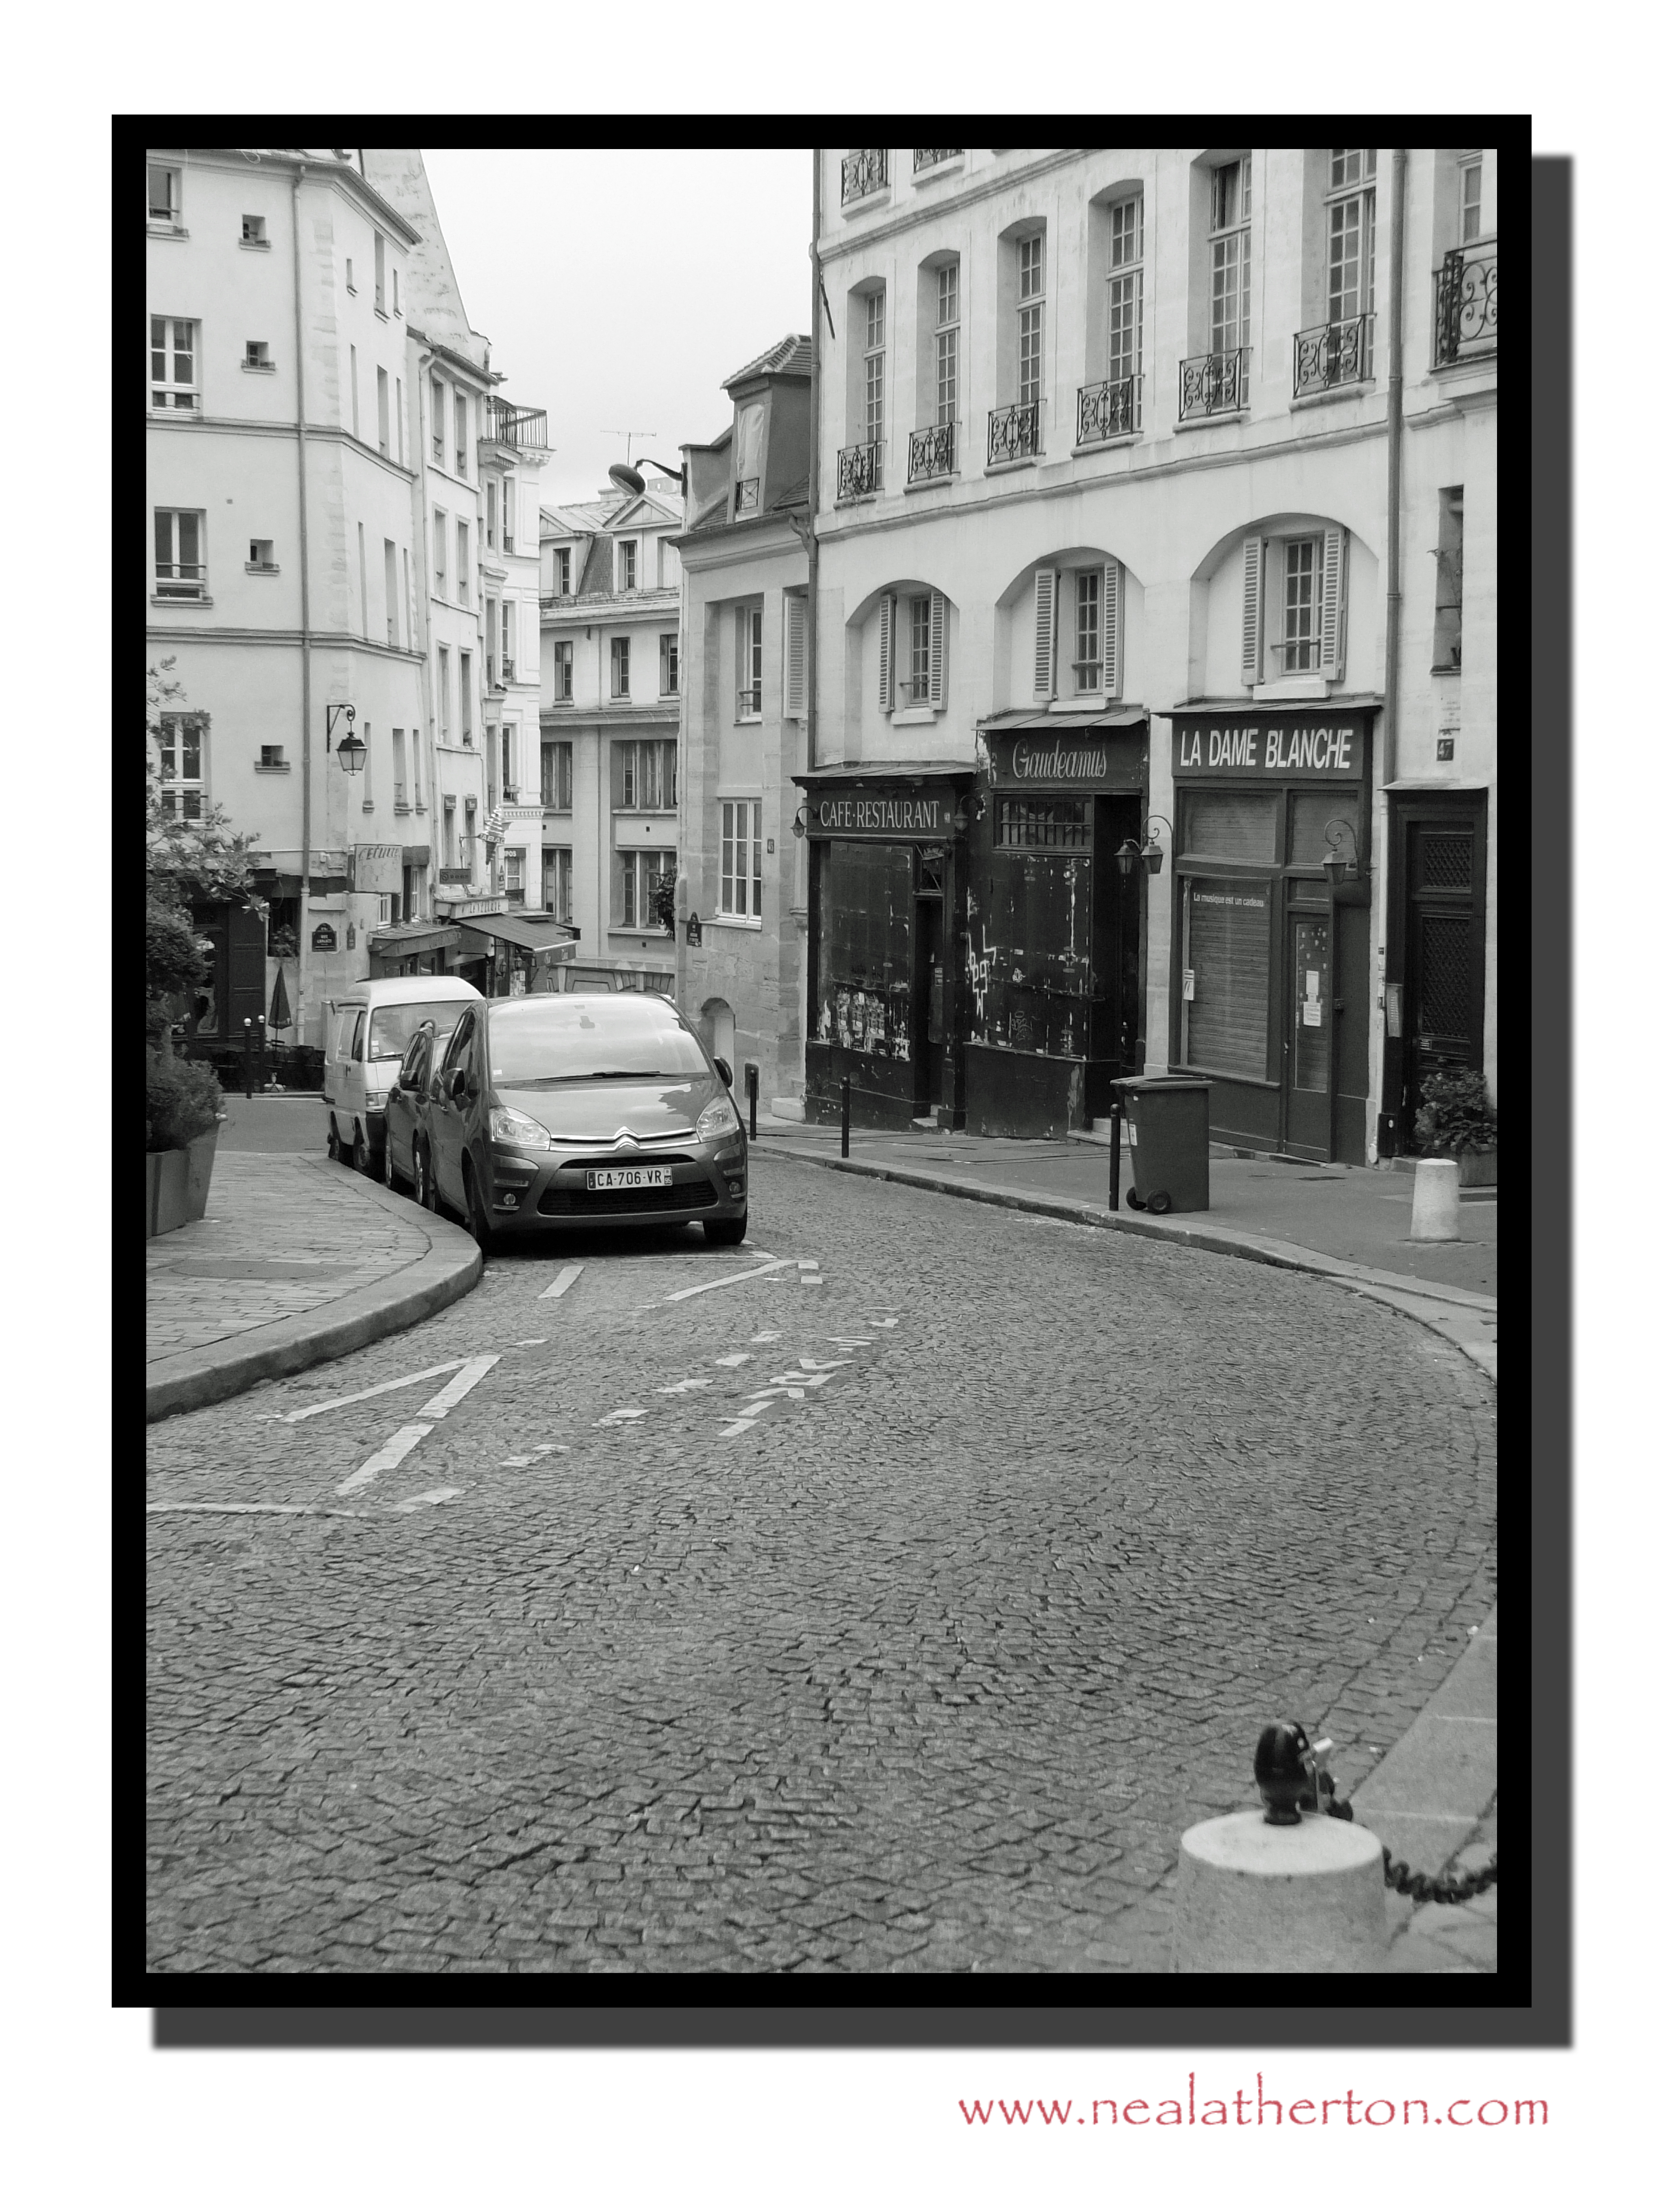 Alt="Rue de la Montagne Sainte Genevieve Paris Midnight in Paris film location from my French travel guide books"